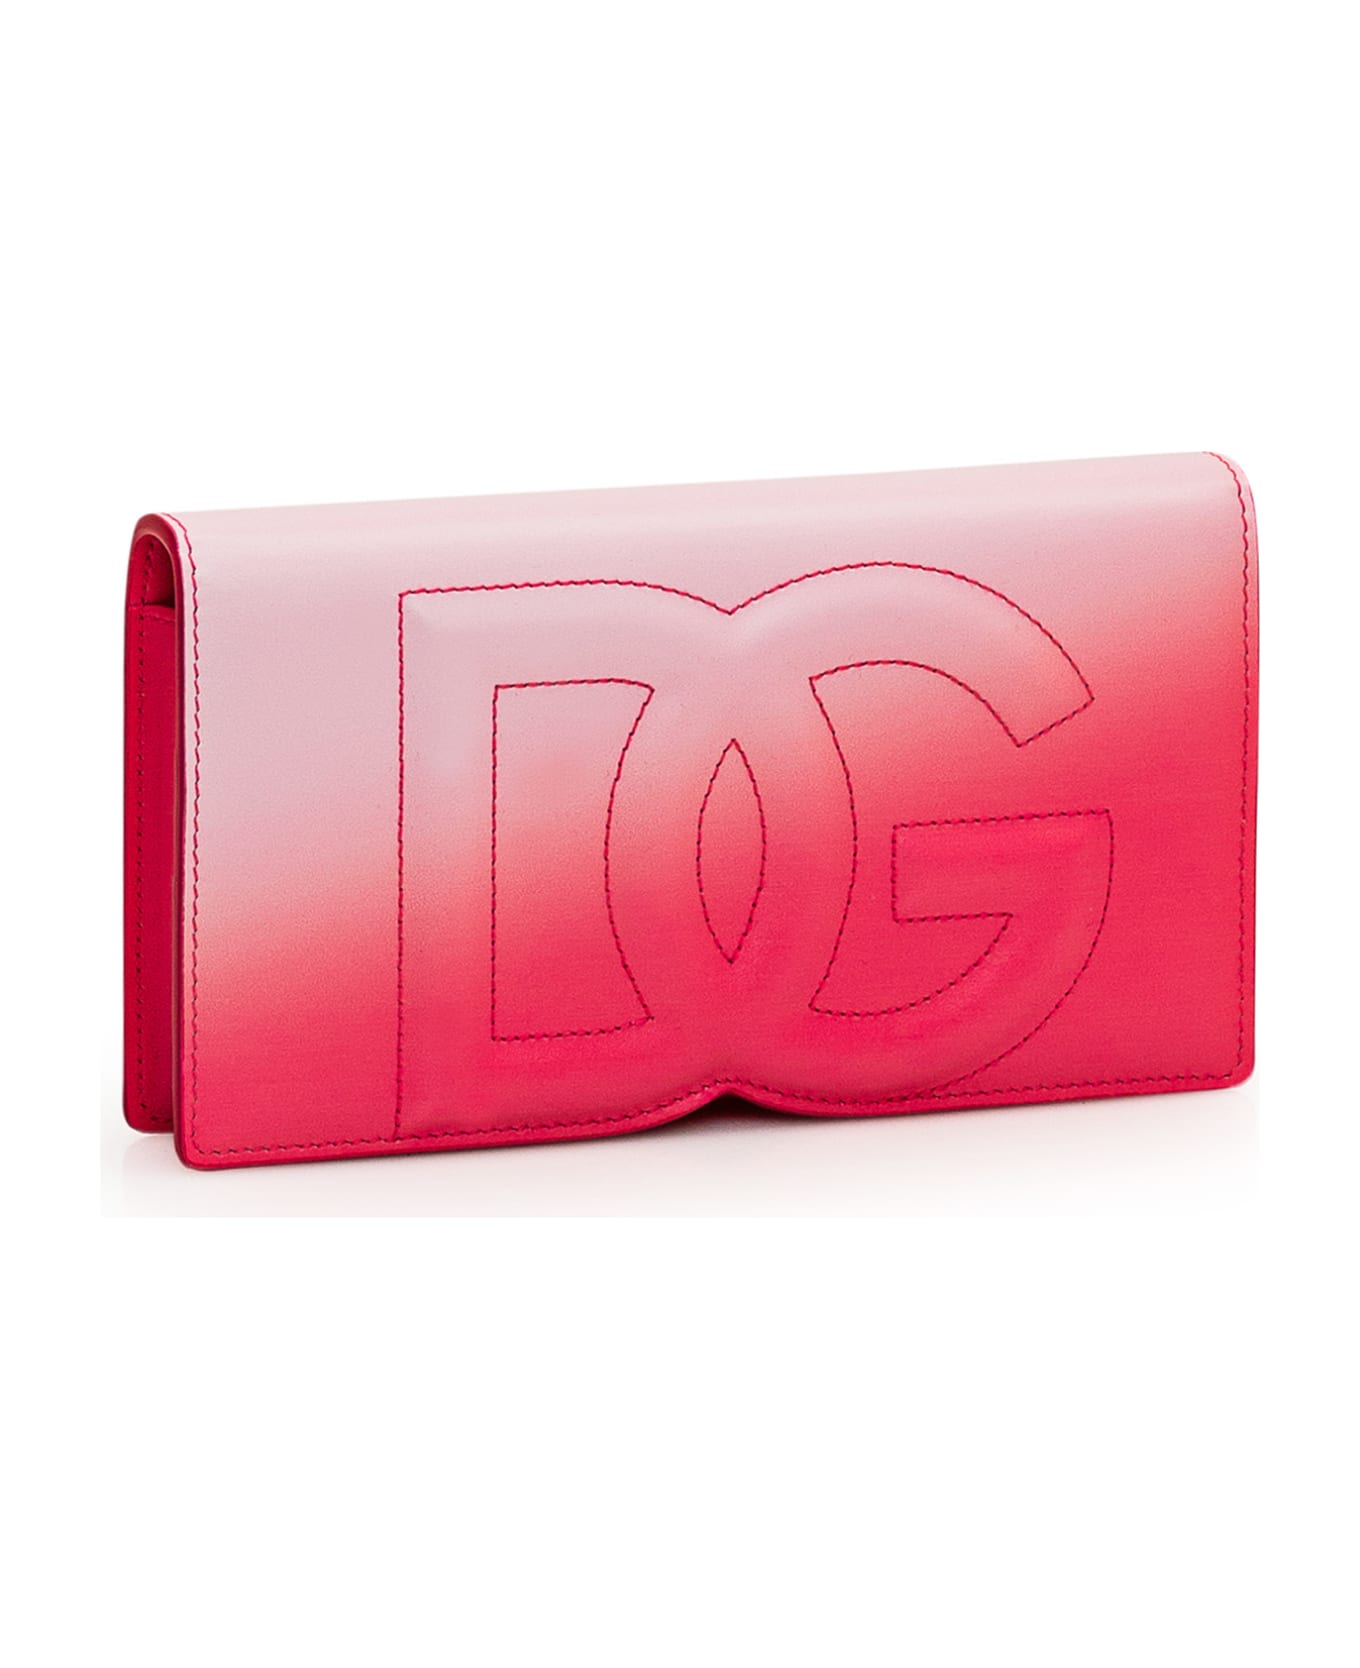 Dolce & Gabbana Phone Bag With Logo - DG DEGRADE ROSA クラッチバッグ